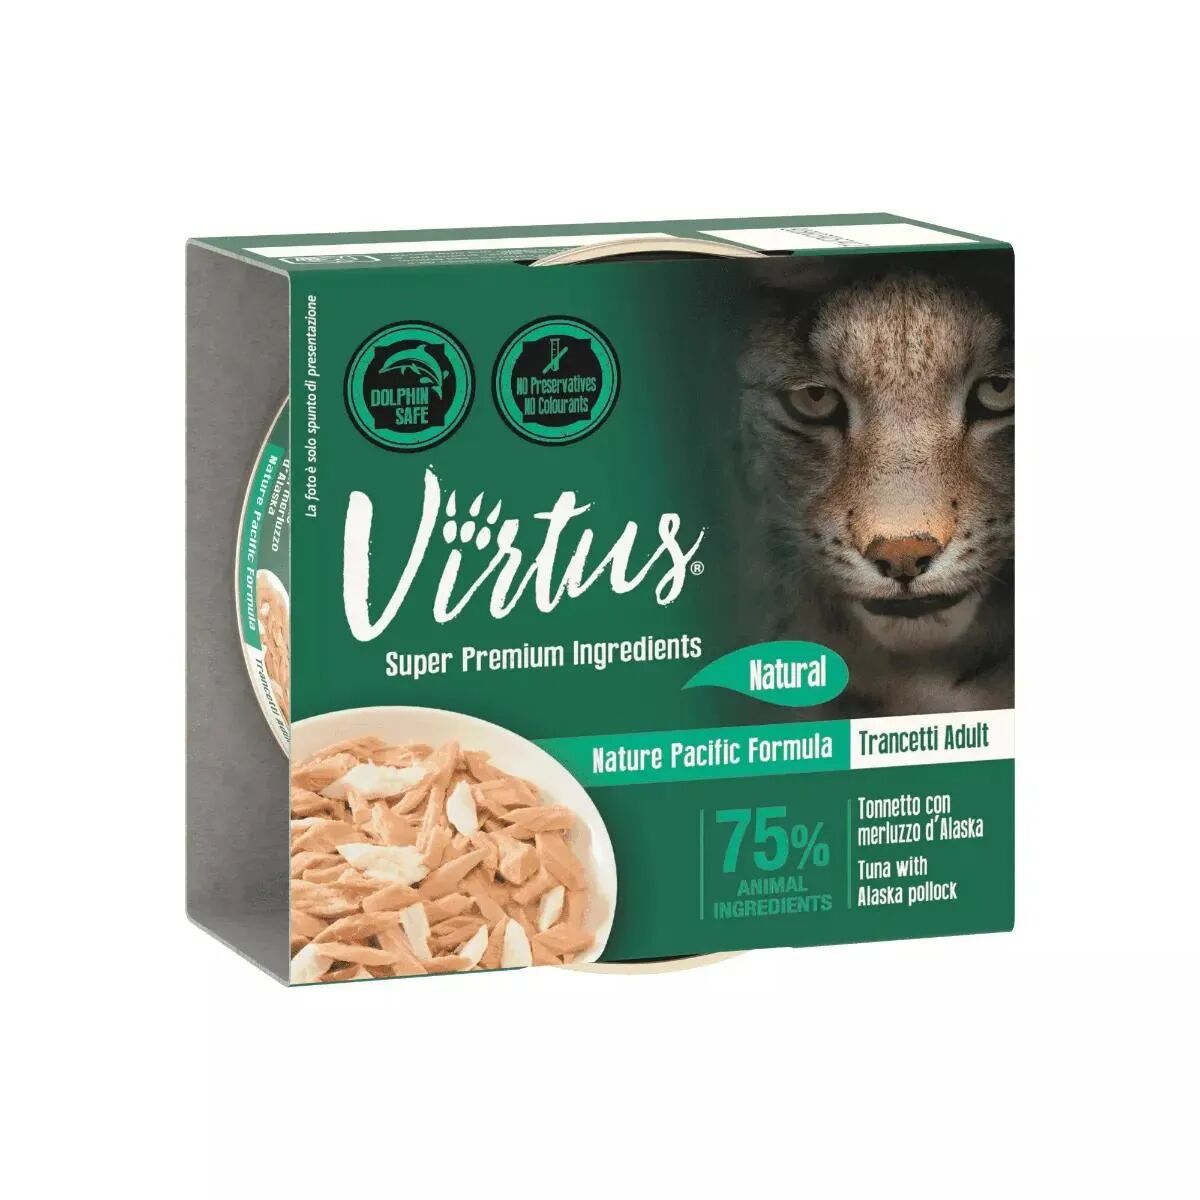 VIRTUS Natural Cat Lattina Multipack 48x70G TONNETTO CON MERLUZZO D'ALASKA